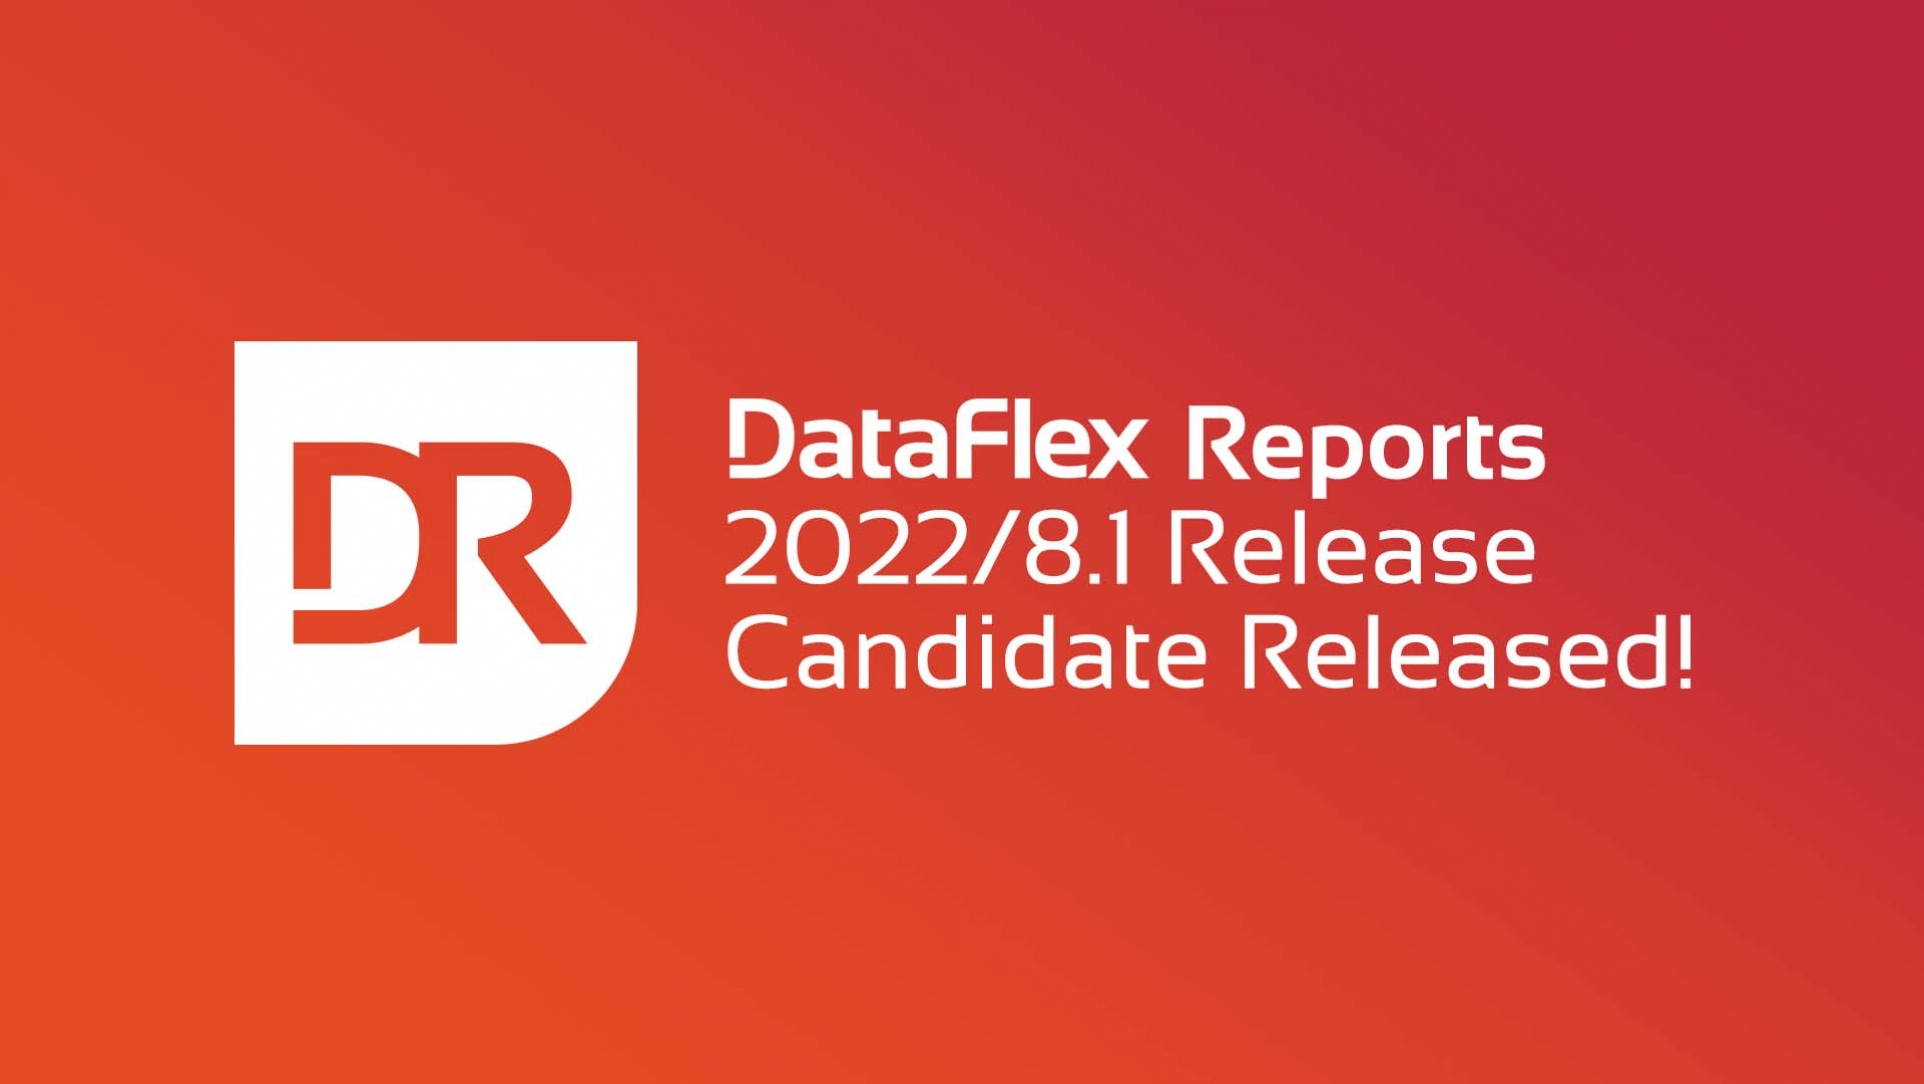 DataFlex Reports 2022/8.1 Release Candidate